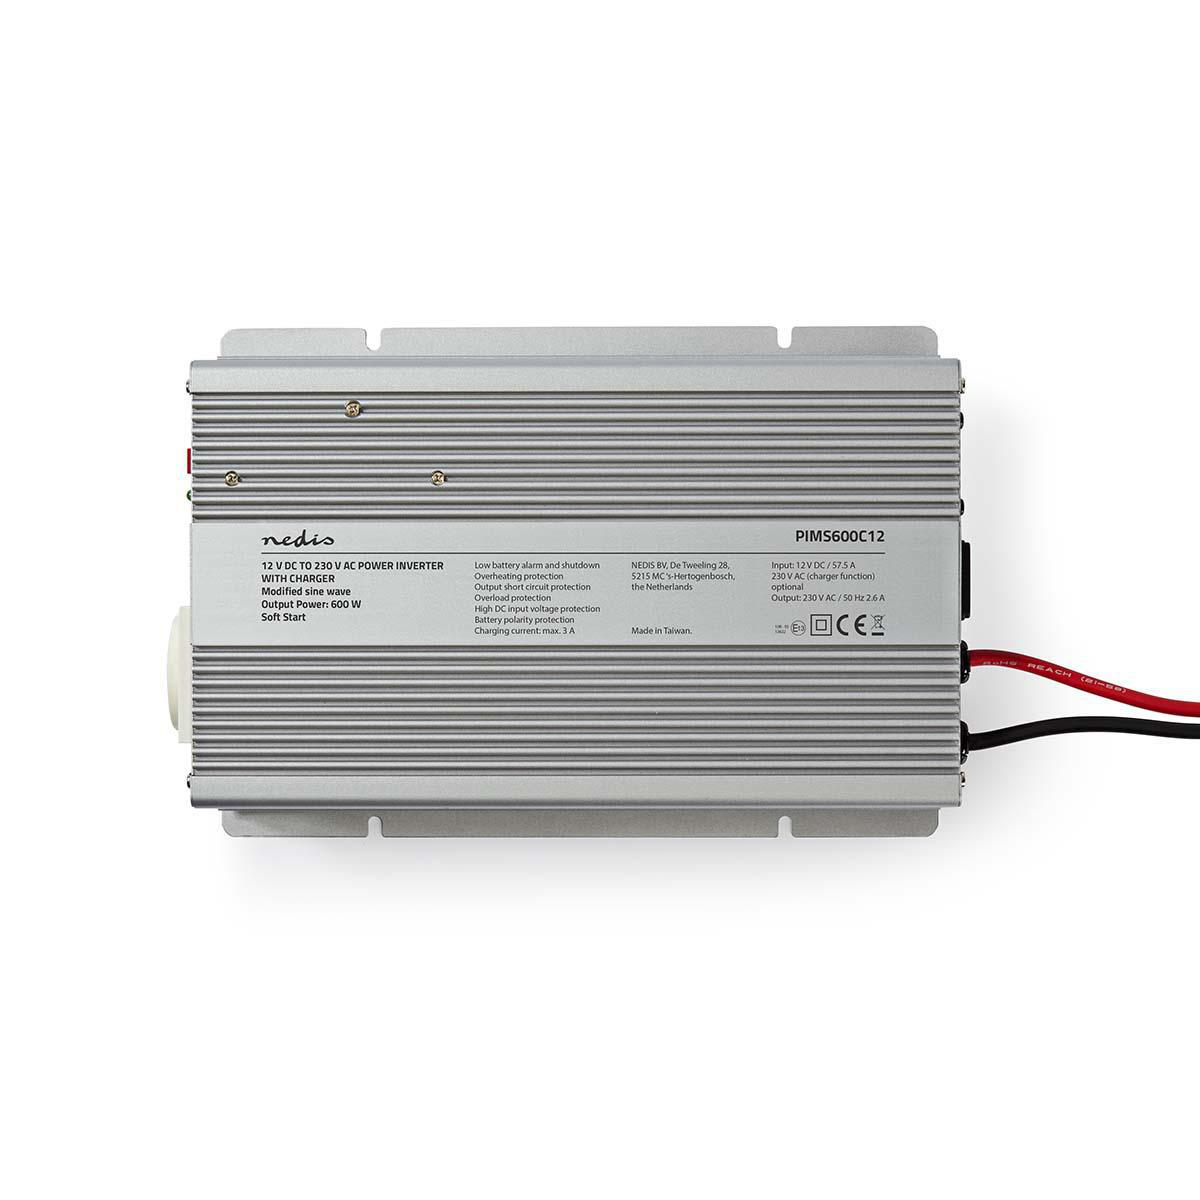 PIMS600C12 Power Inverter NEDIS